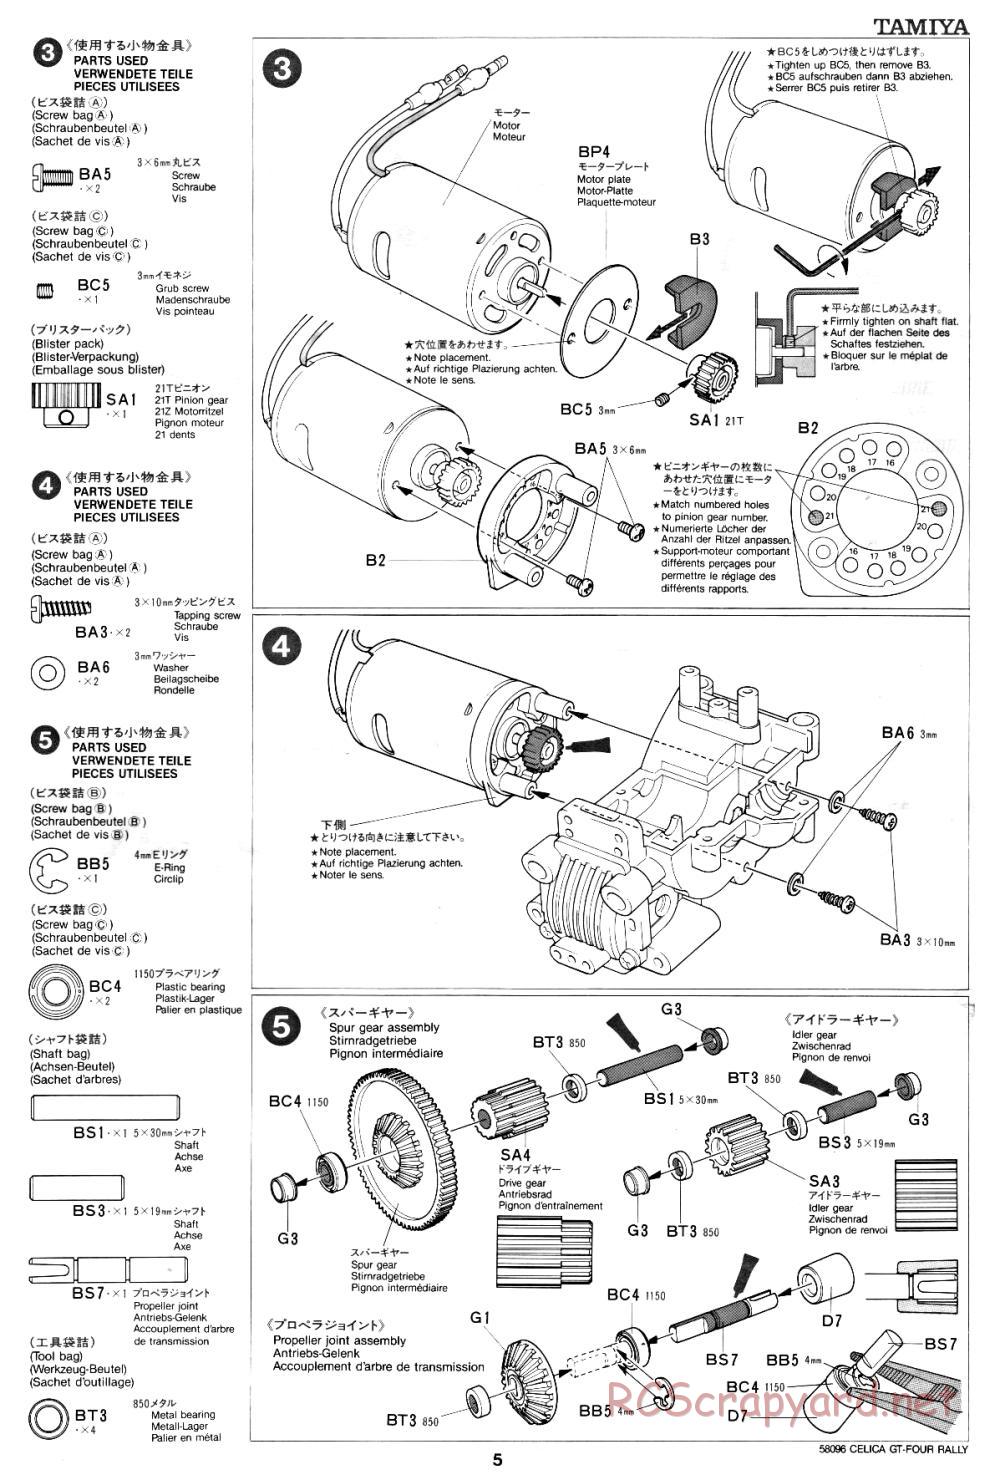 Tamiya - Toyota Celica GT-Four Rally - 58096 - Manual - Page 5